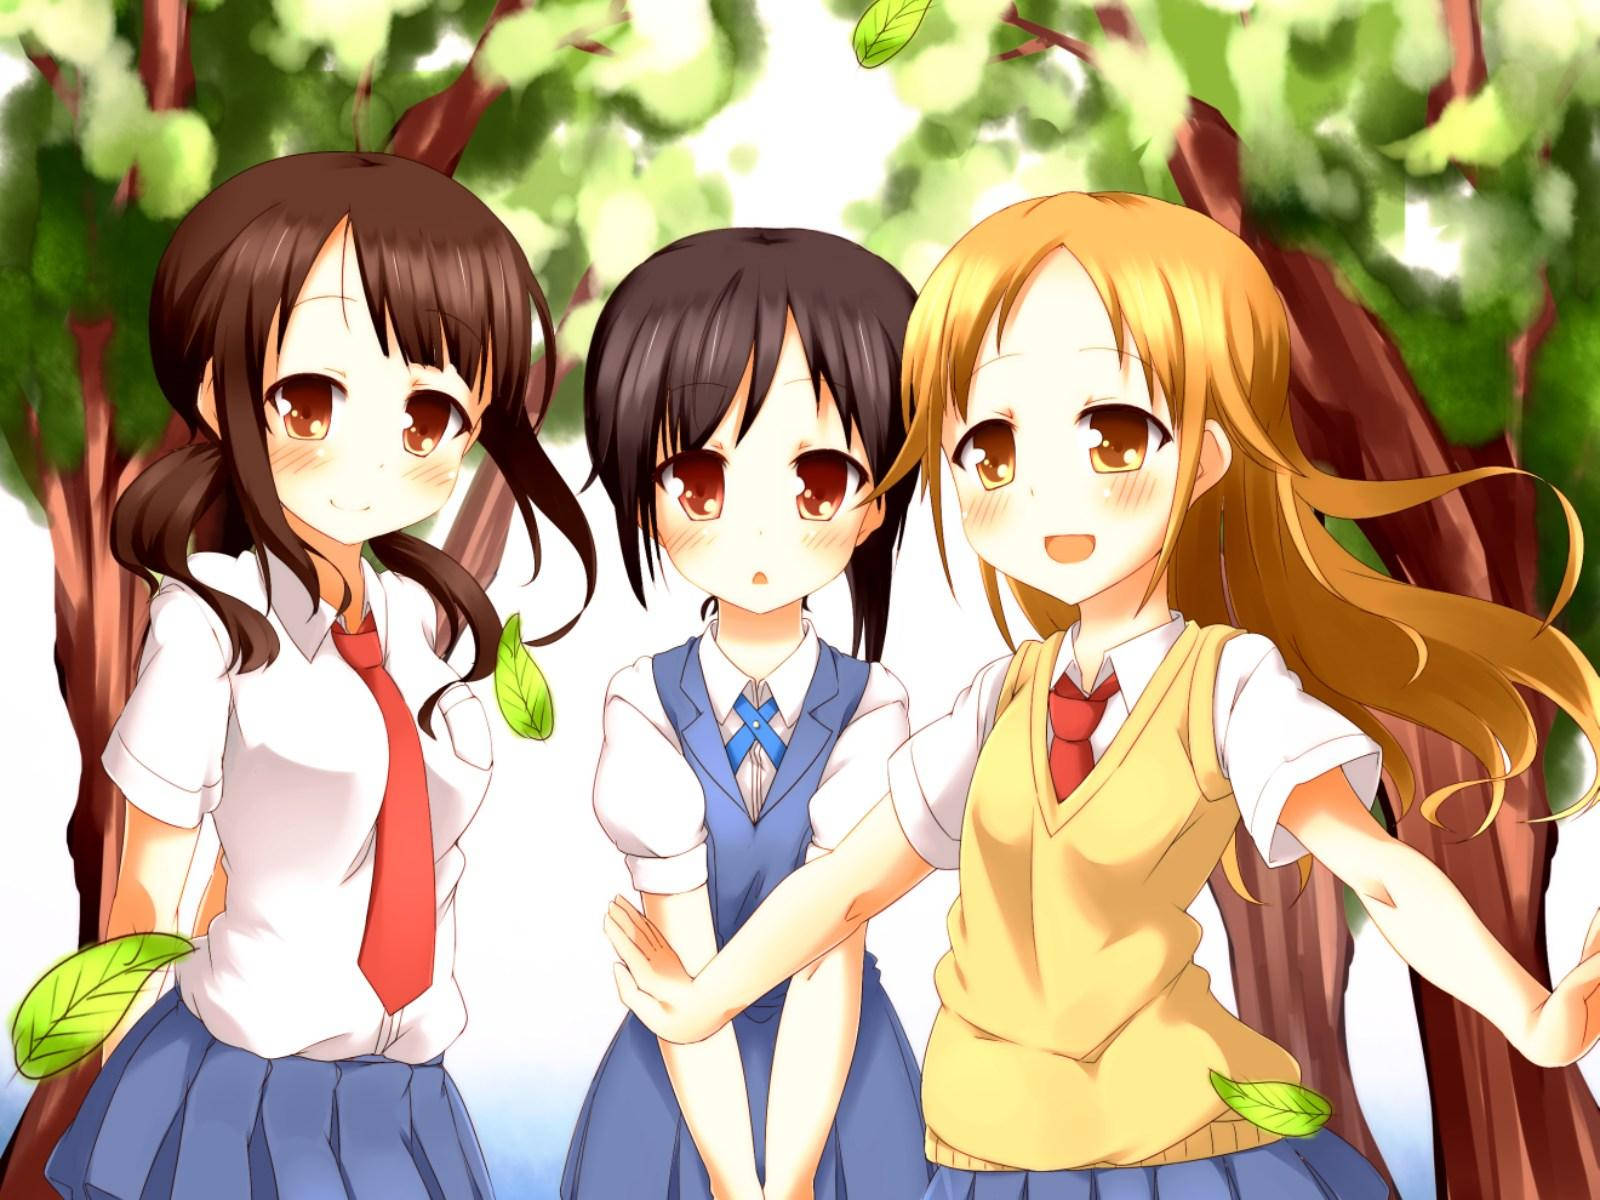 3 Friends - Anime - Friends Wallpaper Download | MobCup